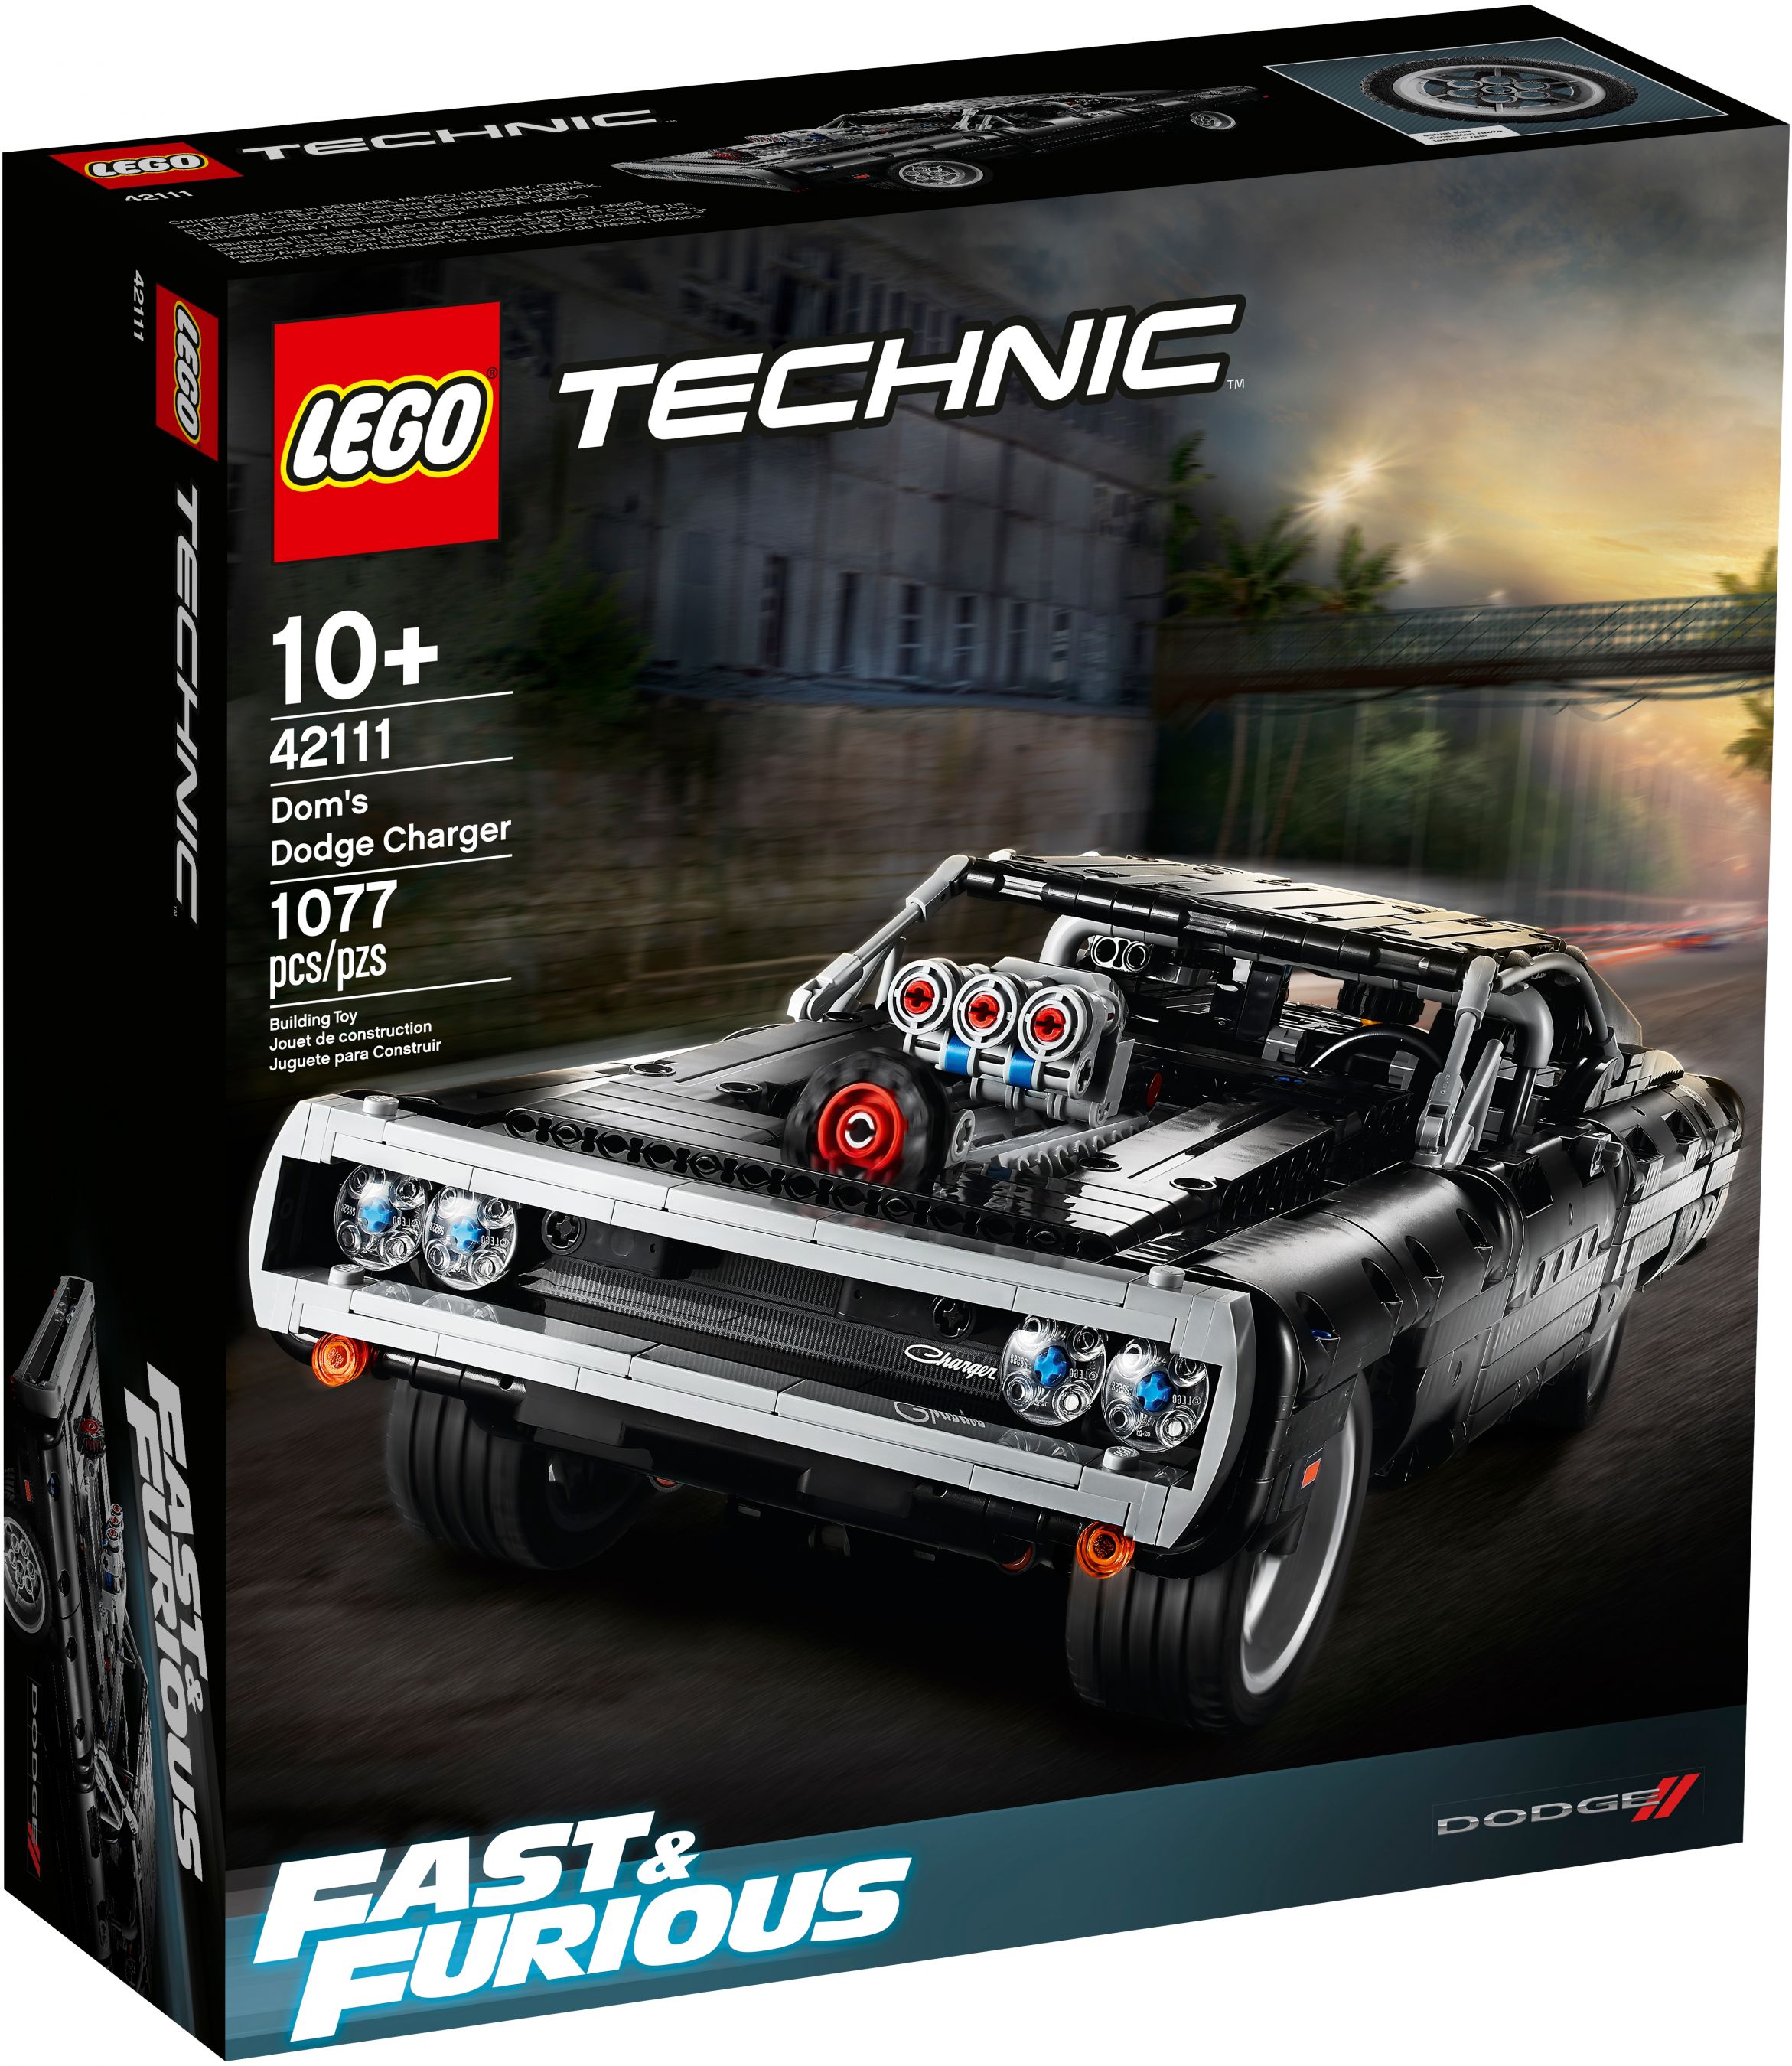 LEGO Technic 42111 Dom's Dodge Charger LEGO_42111_alt1.jpg